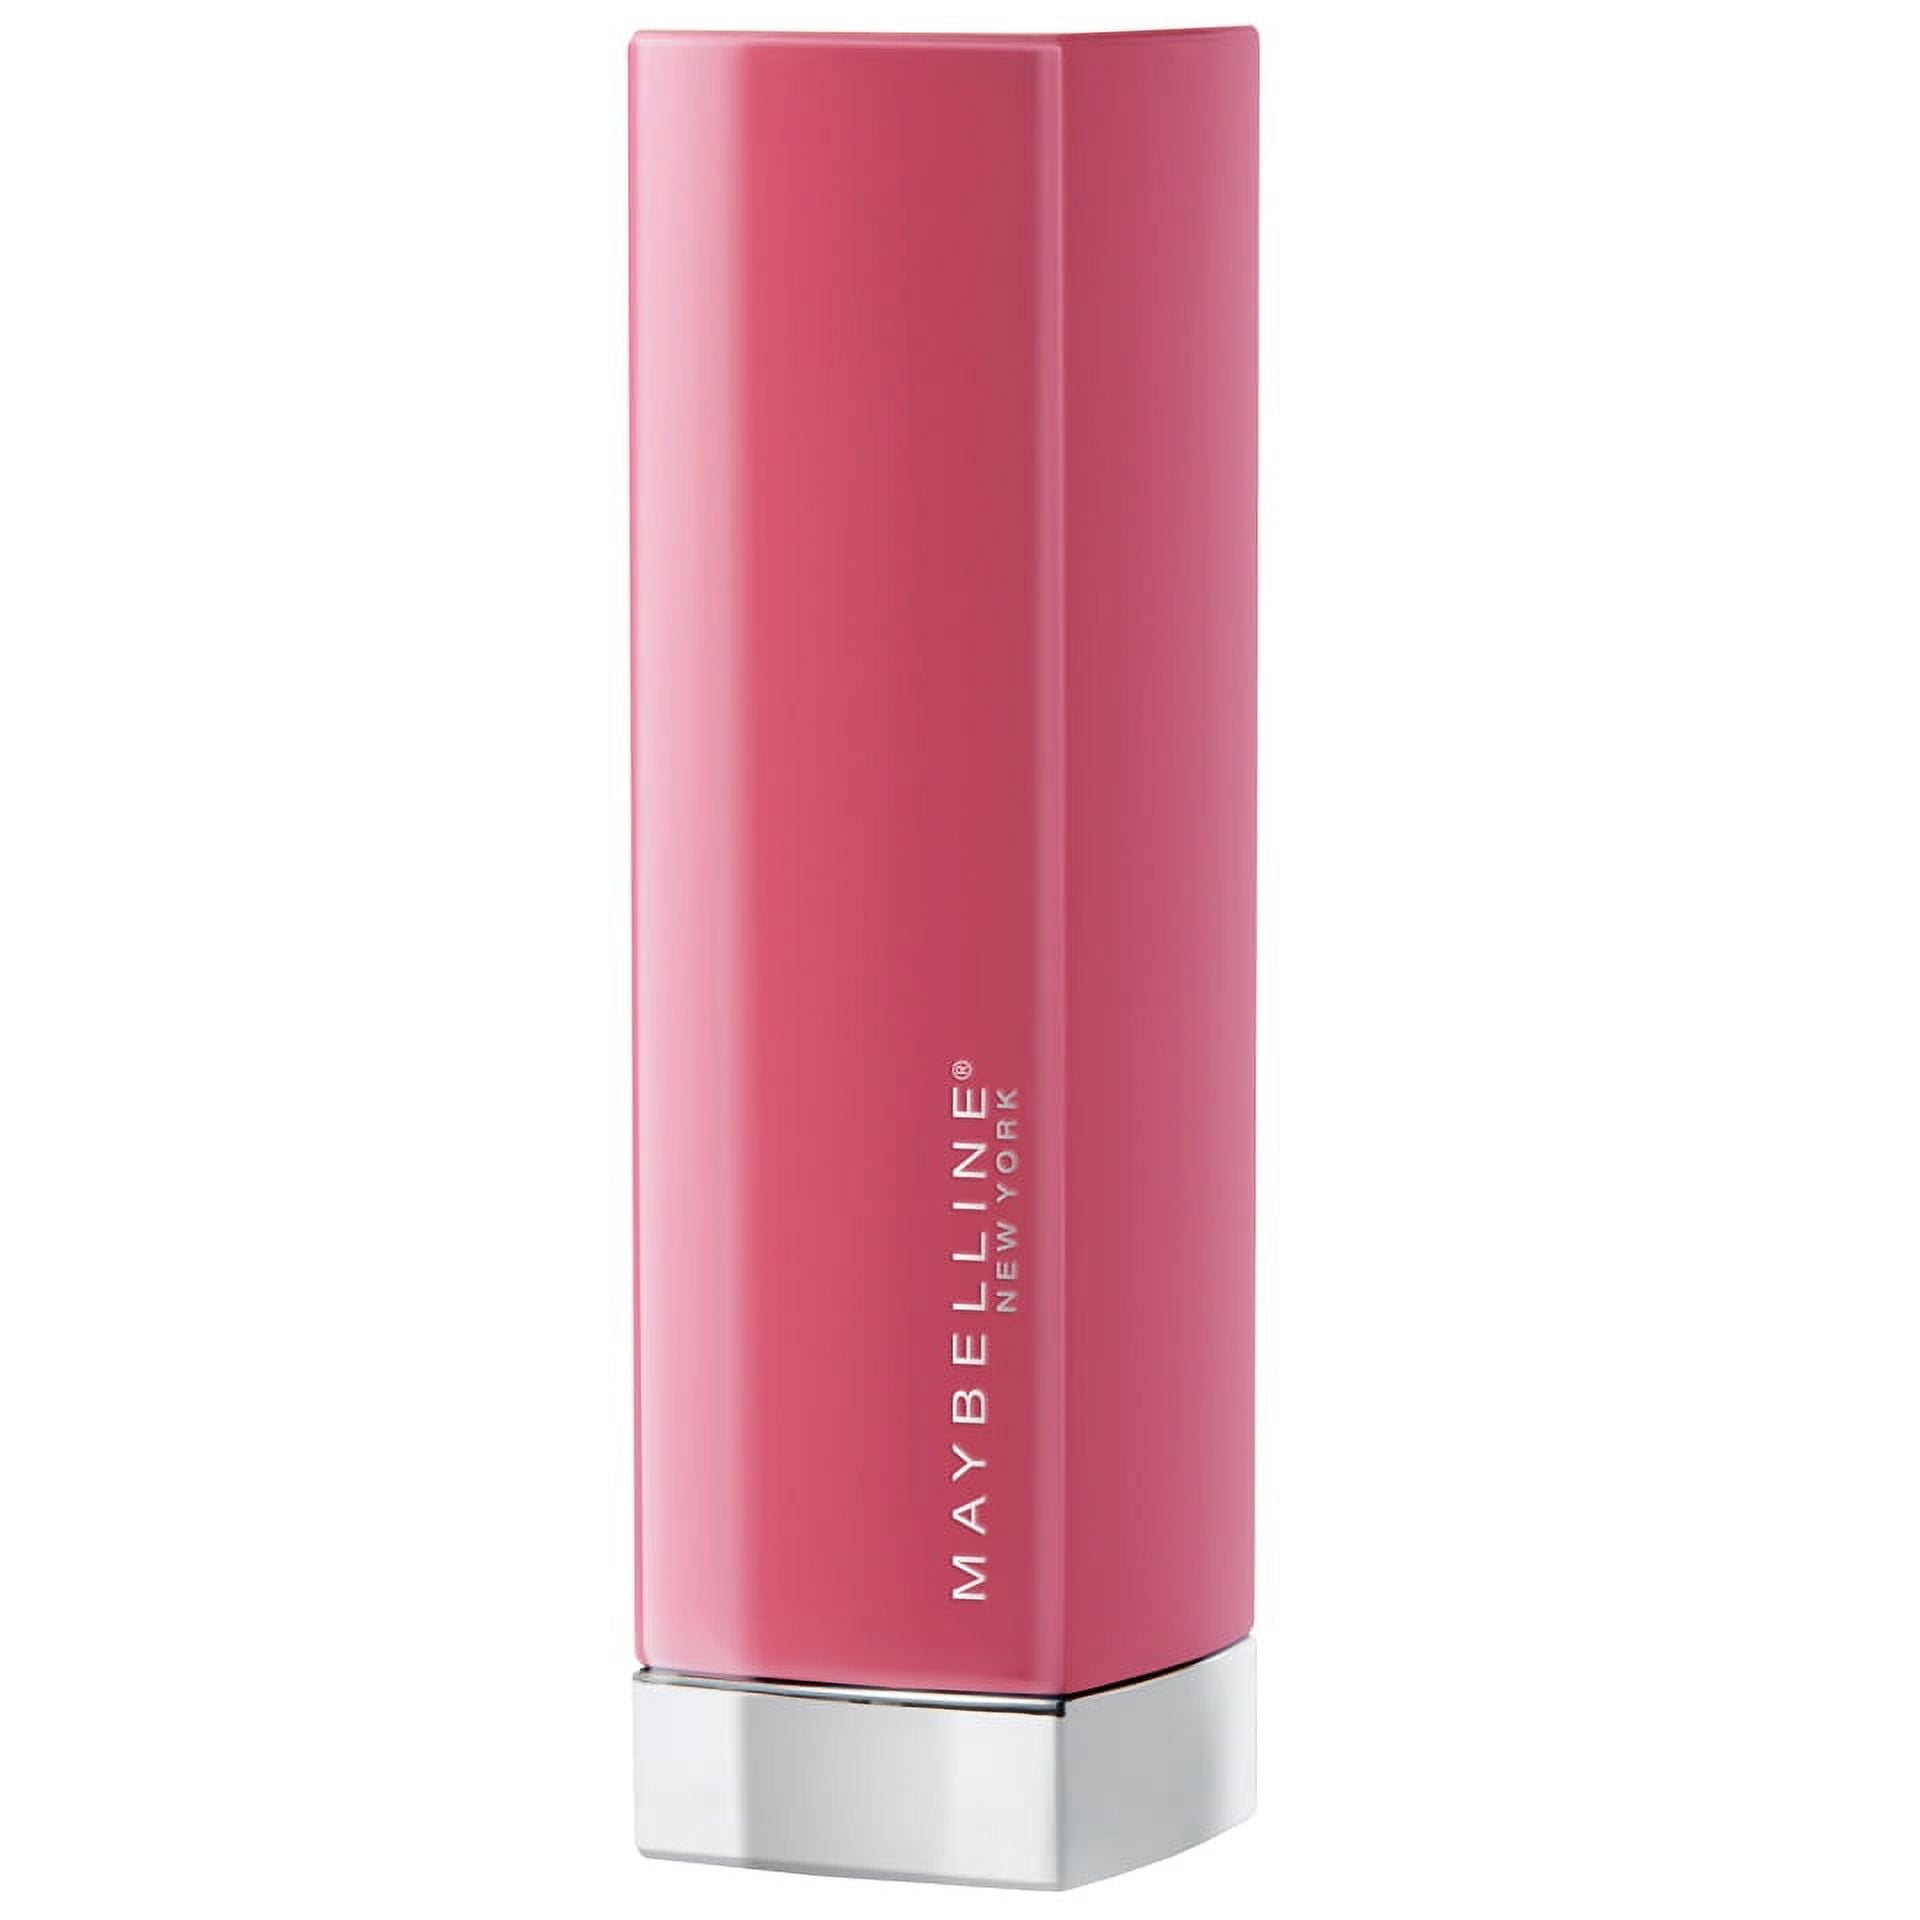 For For All Lipstick, Maybelline Made Sensational Pink Me Color